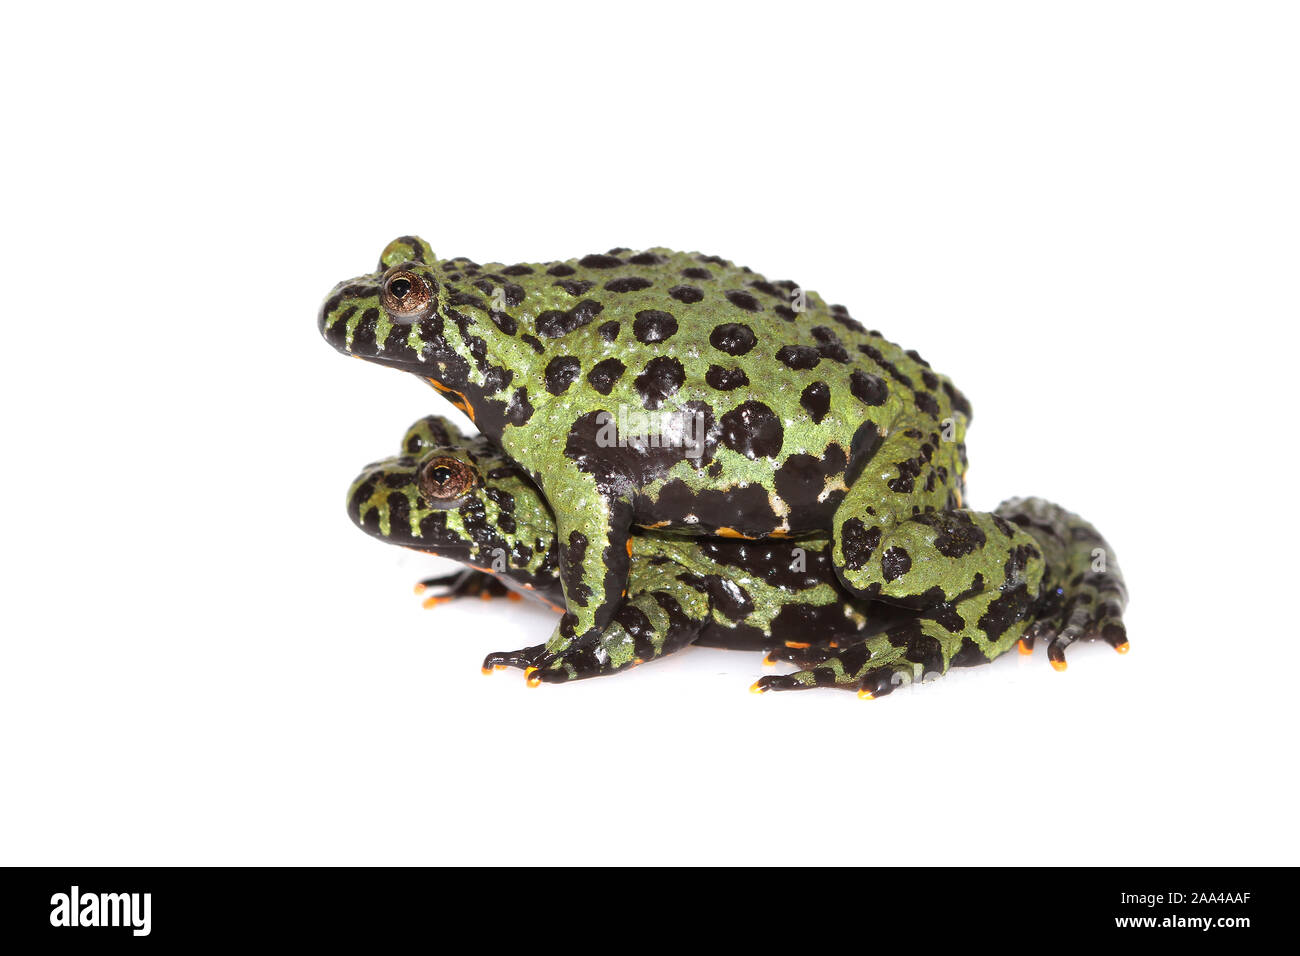 Two Oriental Fire-bellied Toads Stock Photo